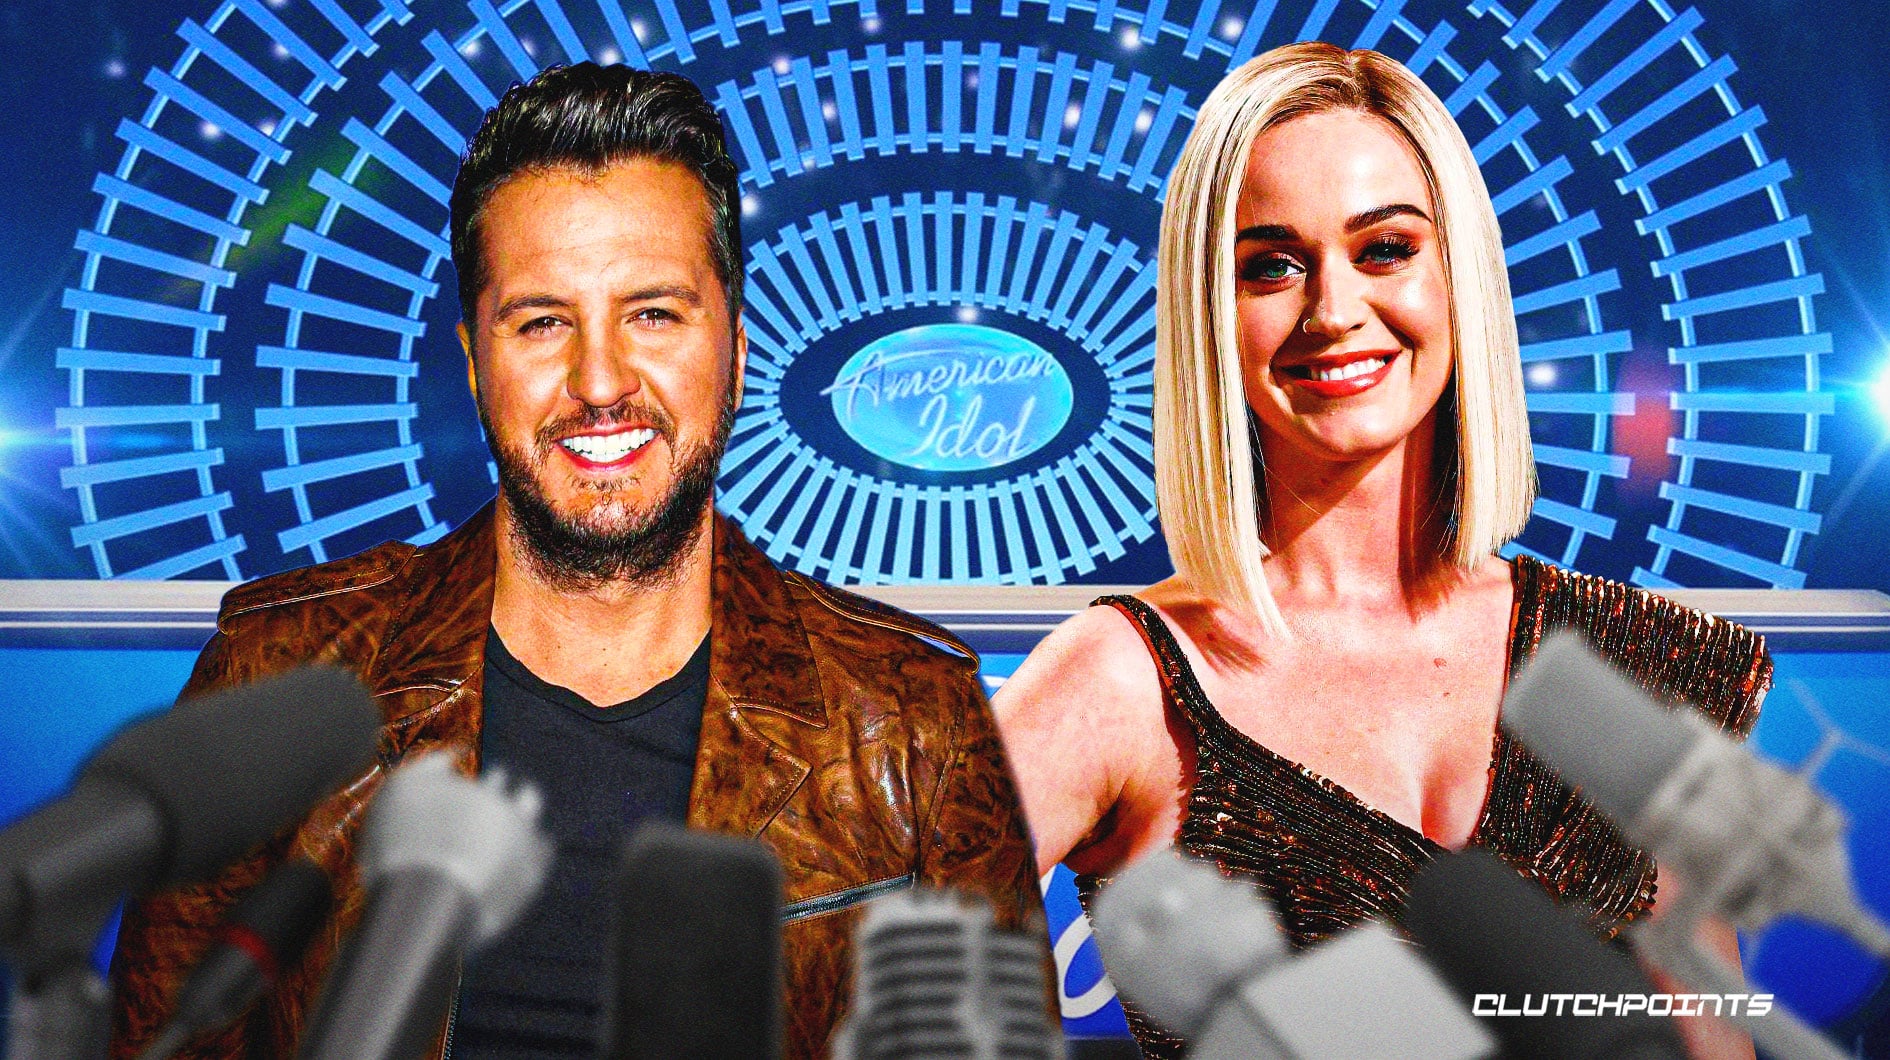 Luke Bryan defends Katy Perry amid American Idol backlash